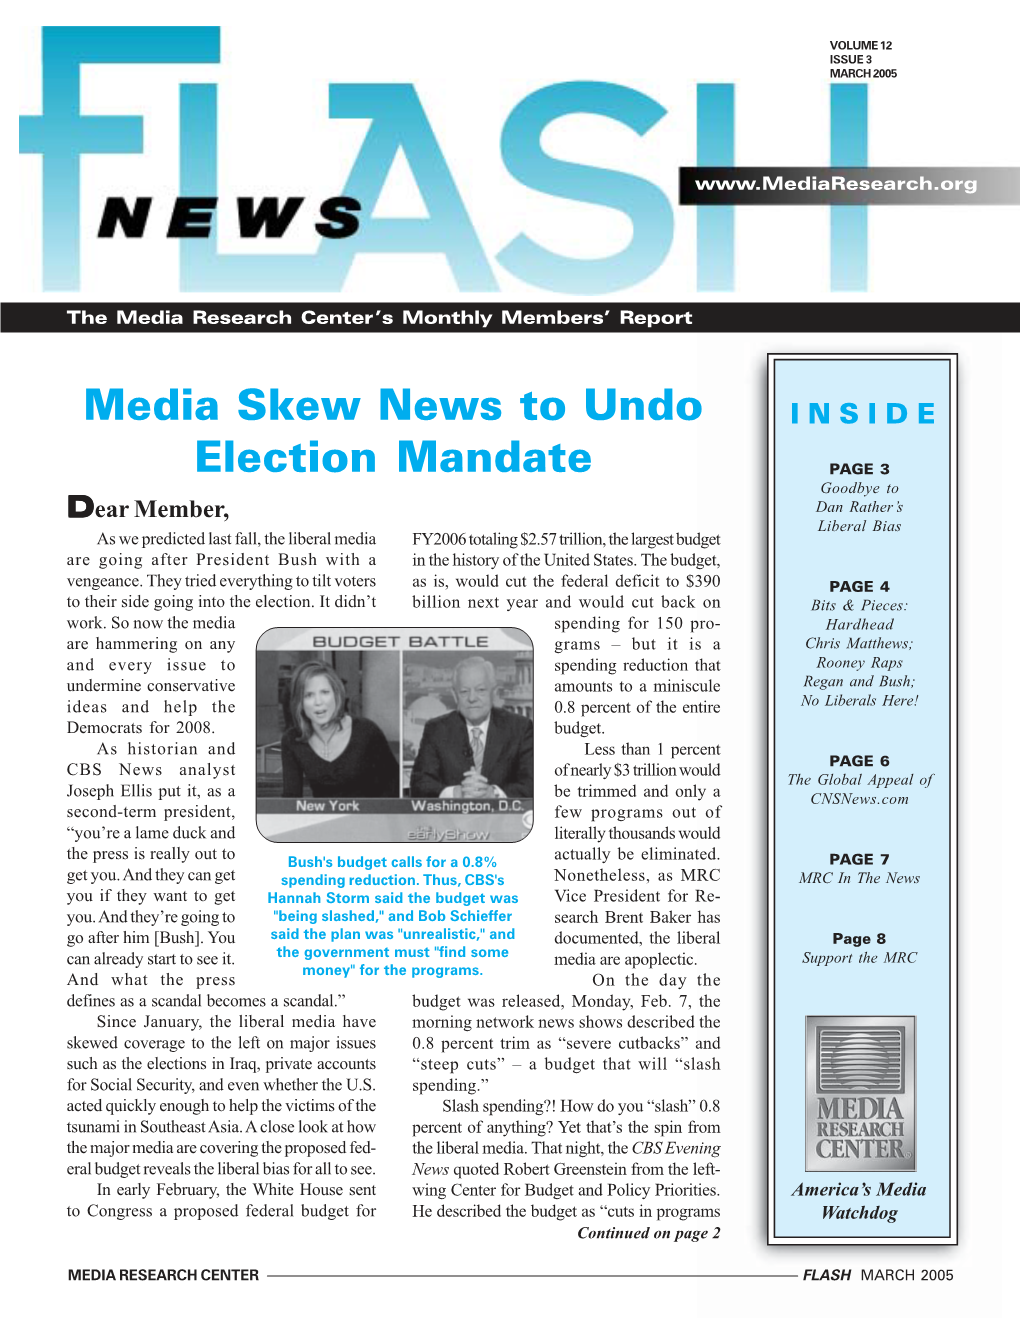 Media Skew News to Undo Election Mandate